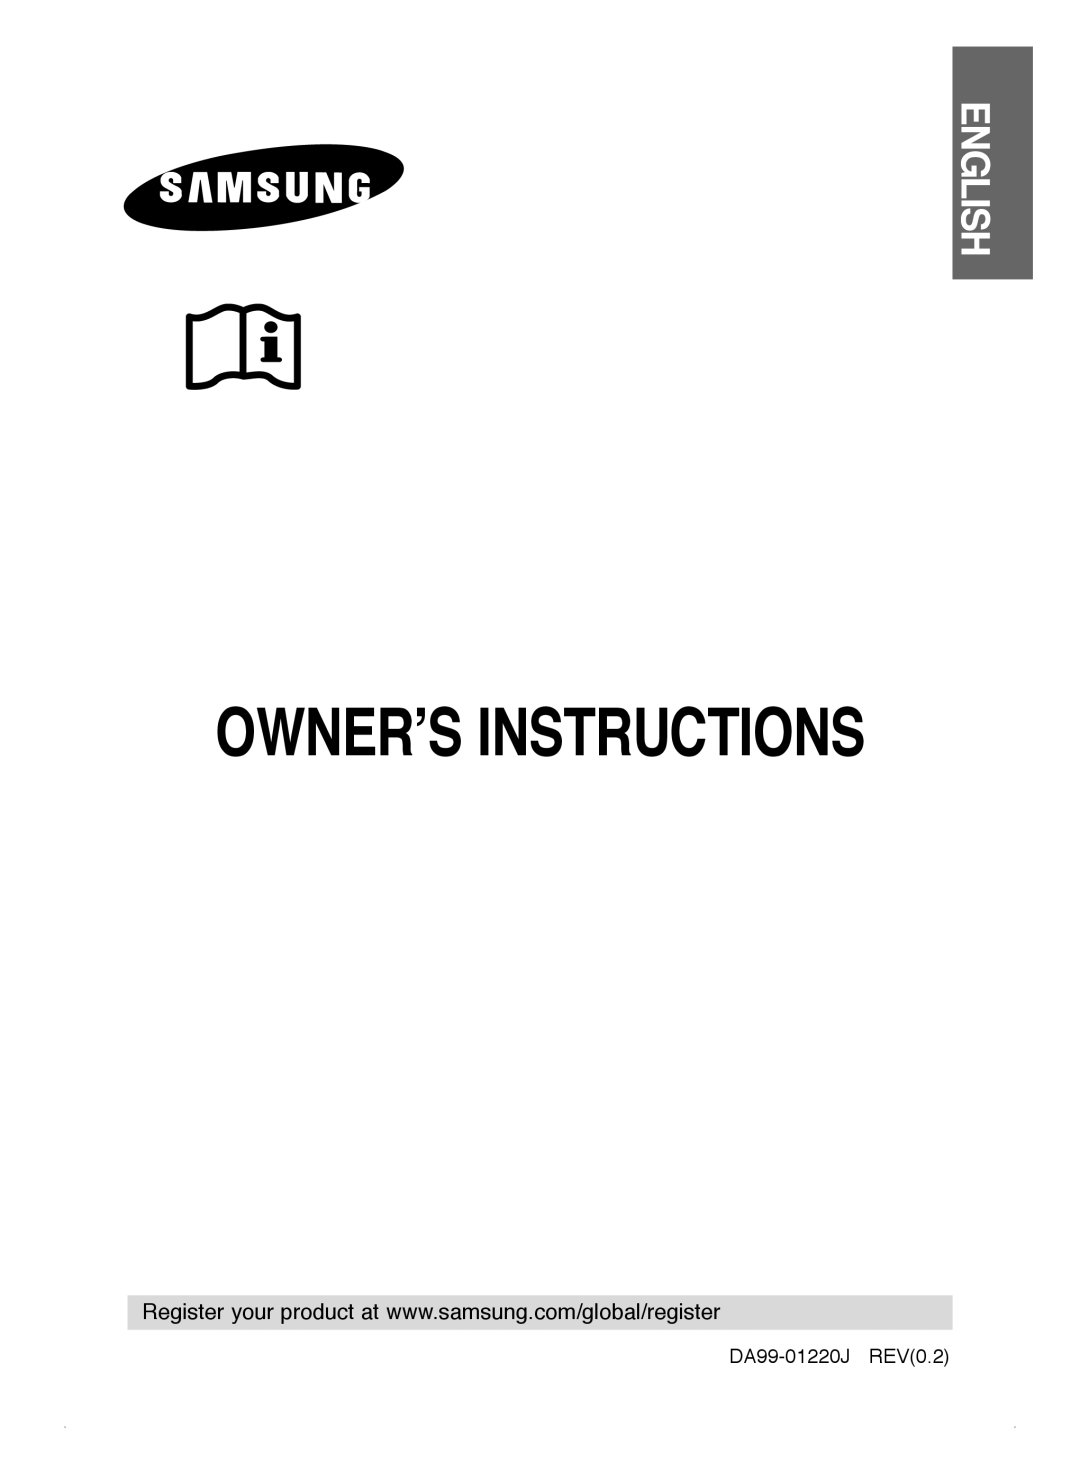 Samsung DA99-01220J manual English, Owner’S Instructions 